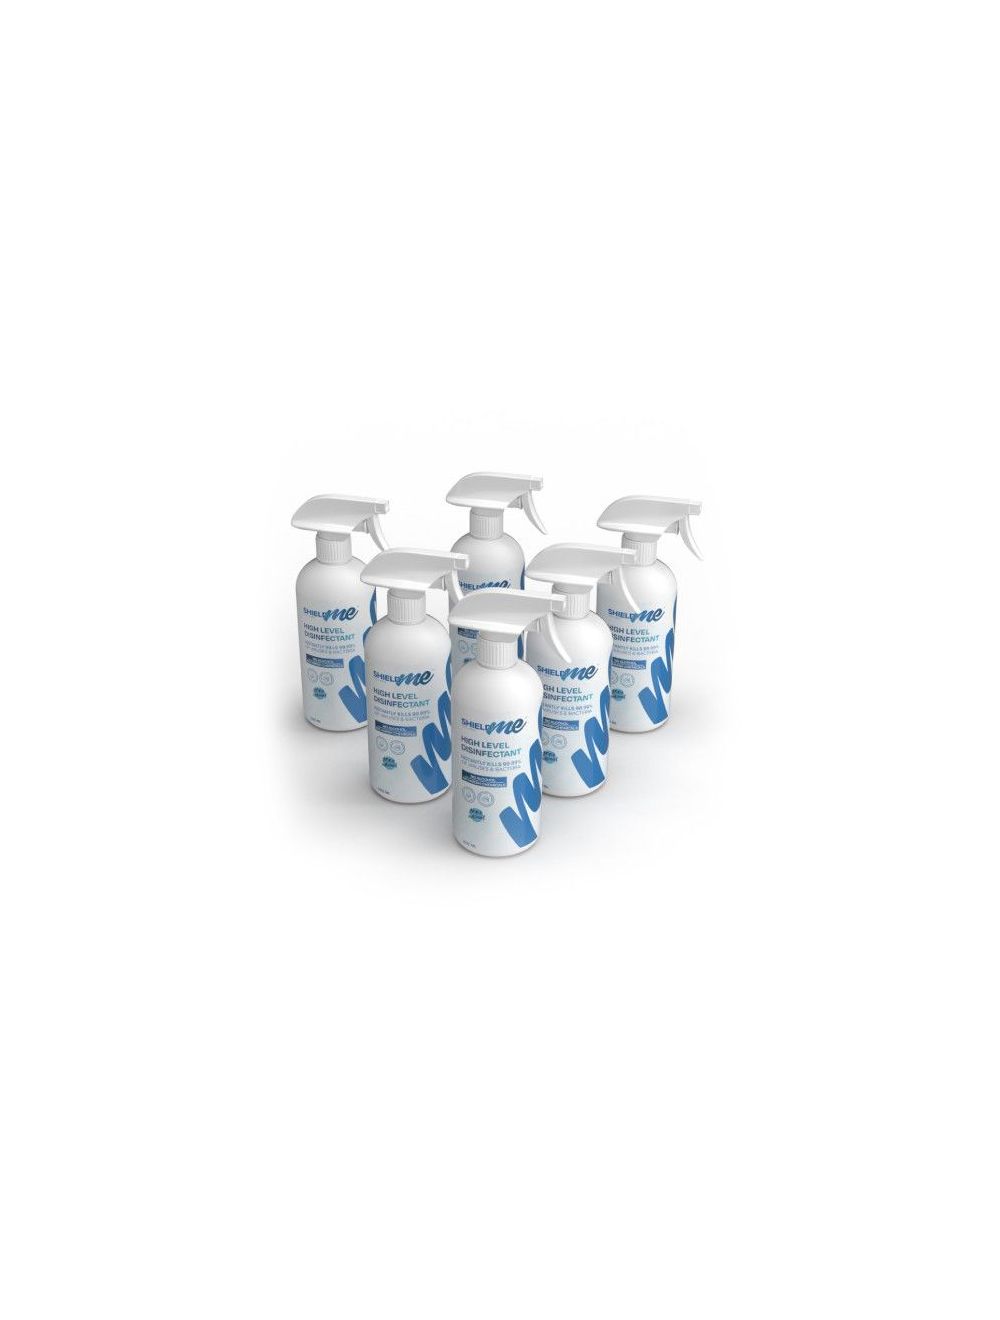 SHIELDme High Level Hand Sanitizer & Surface Disinfectant [Bundle Offer 6 X 500ML]-OC-S0CM-2WS4